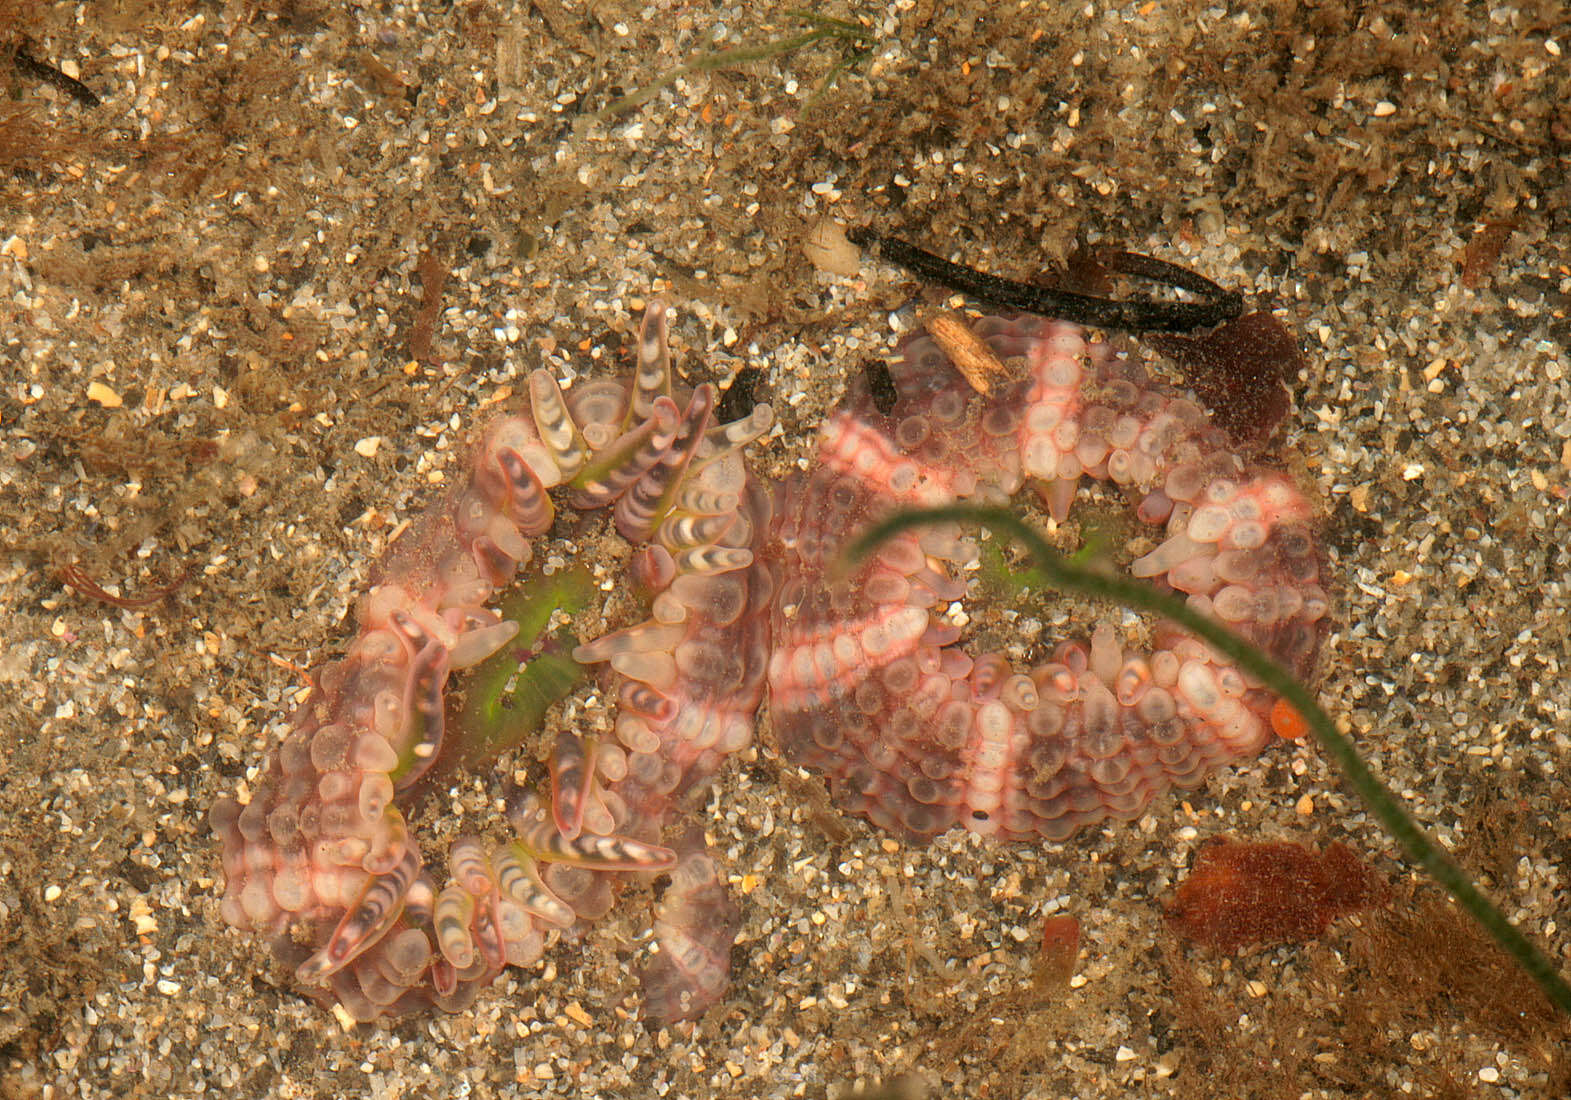 Image of gem anemone